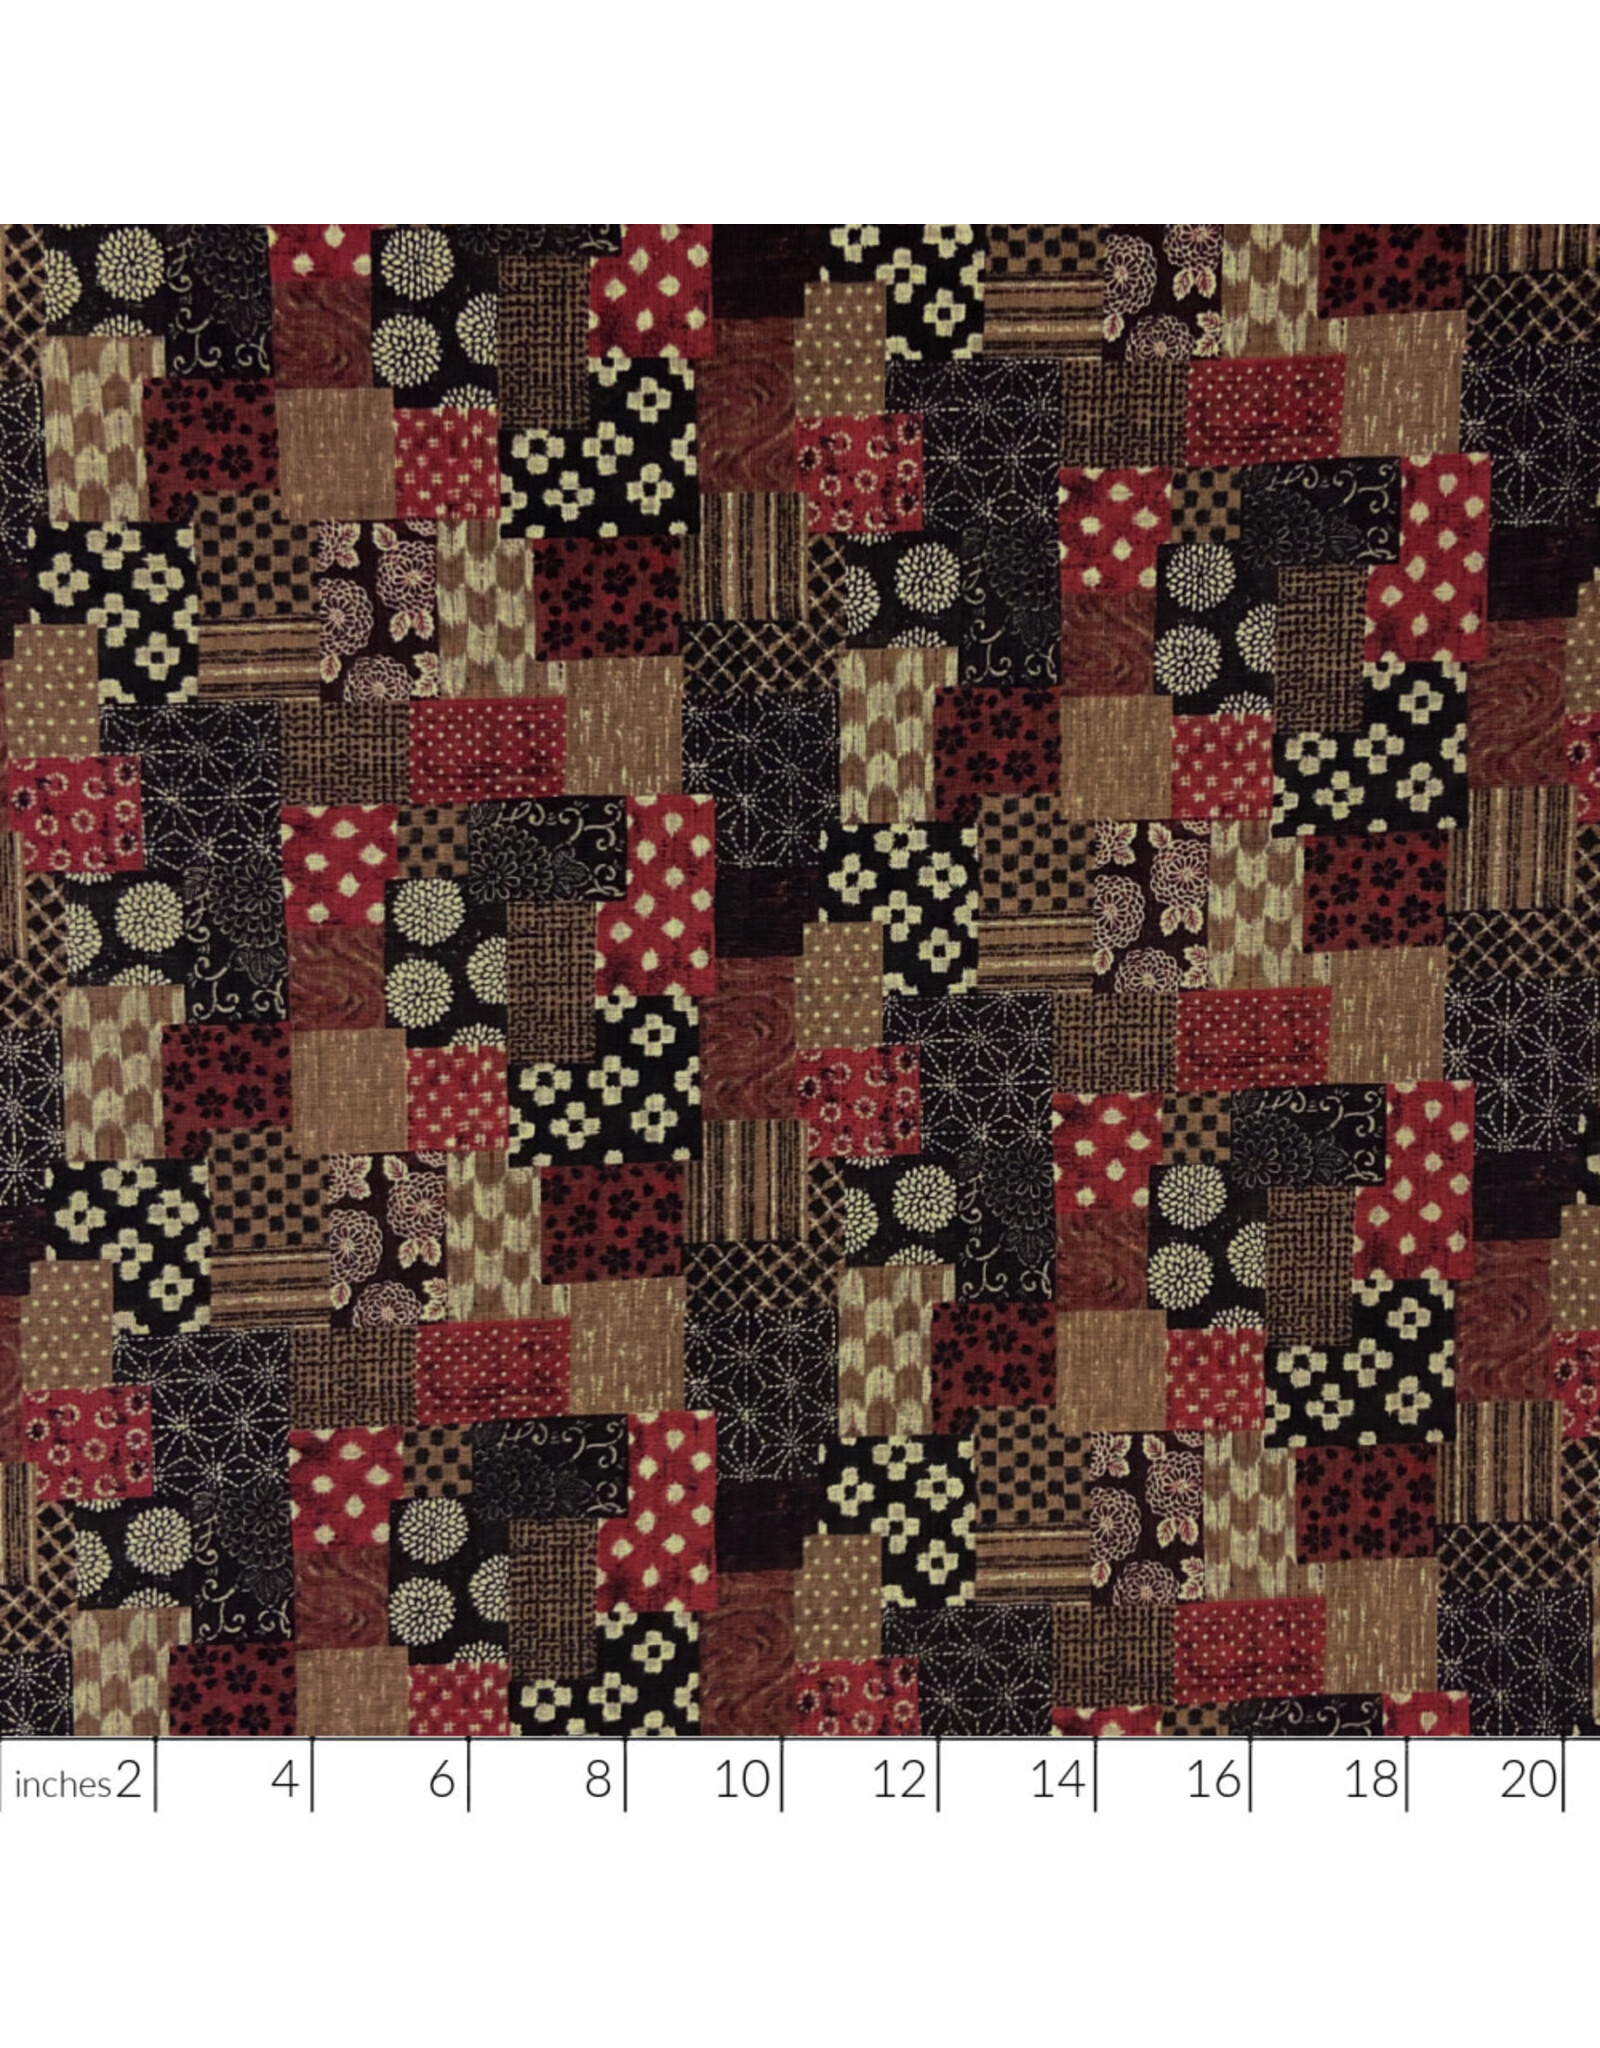 Sevenberry Nara Homespun, Faux-Boro in Red & Black, Fabric Half-Yards